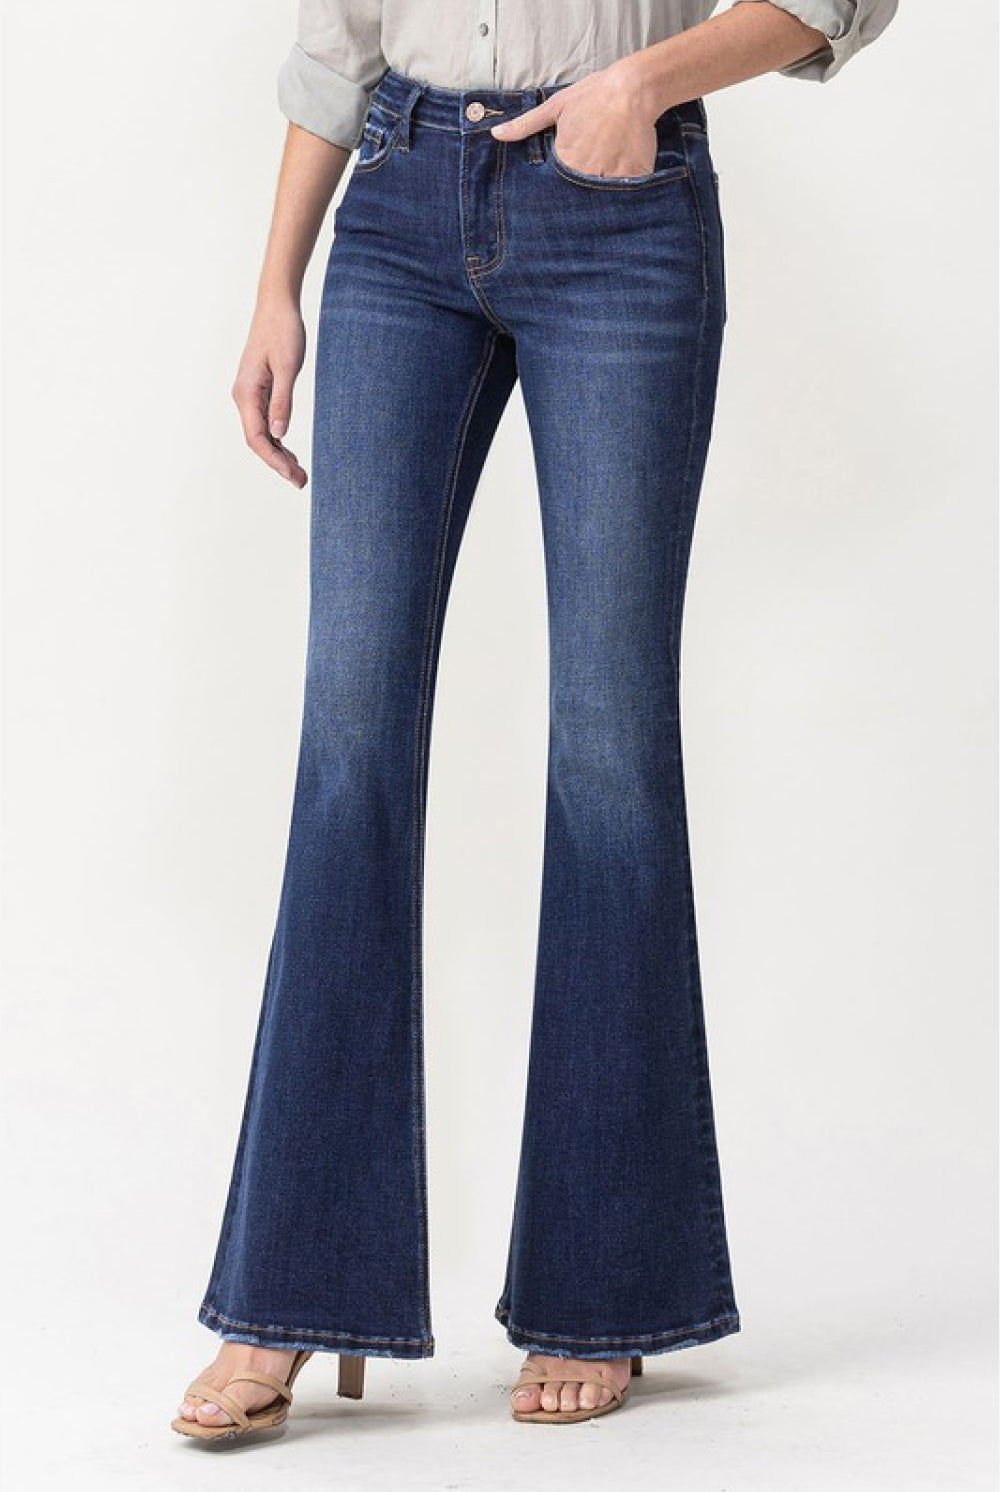 Dark Slate Gray Lovervet Full Size Joanna Midrise Flare Jeans Pants